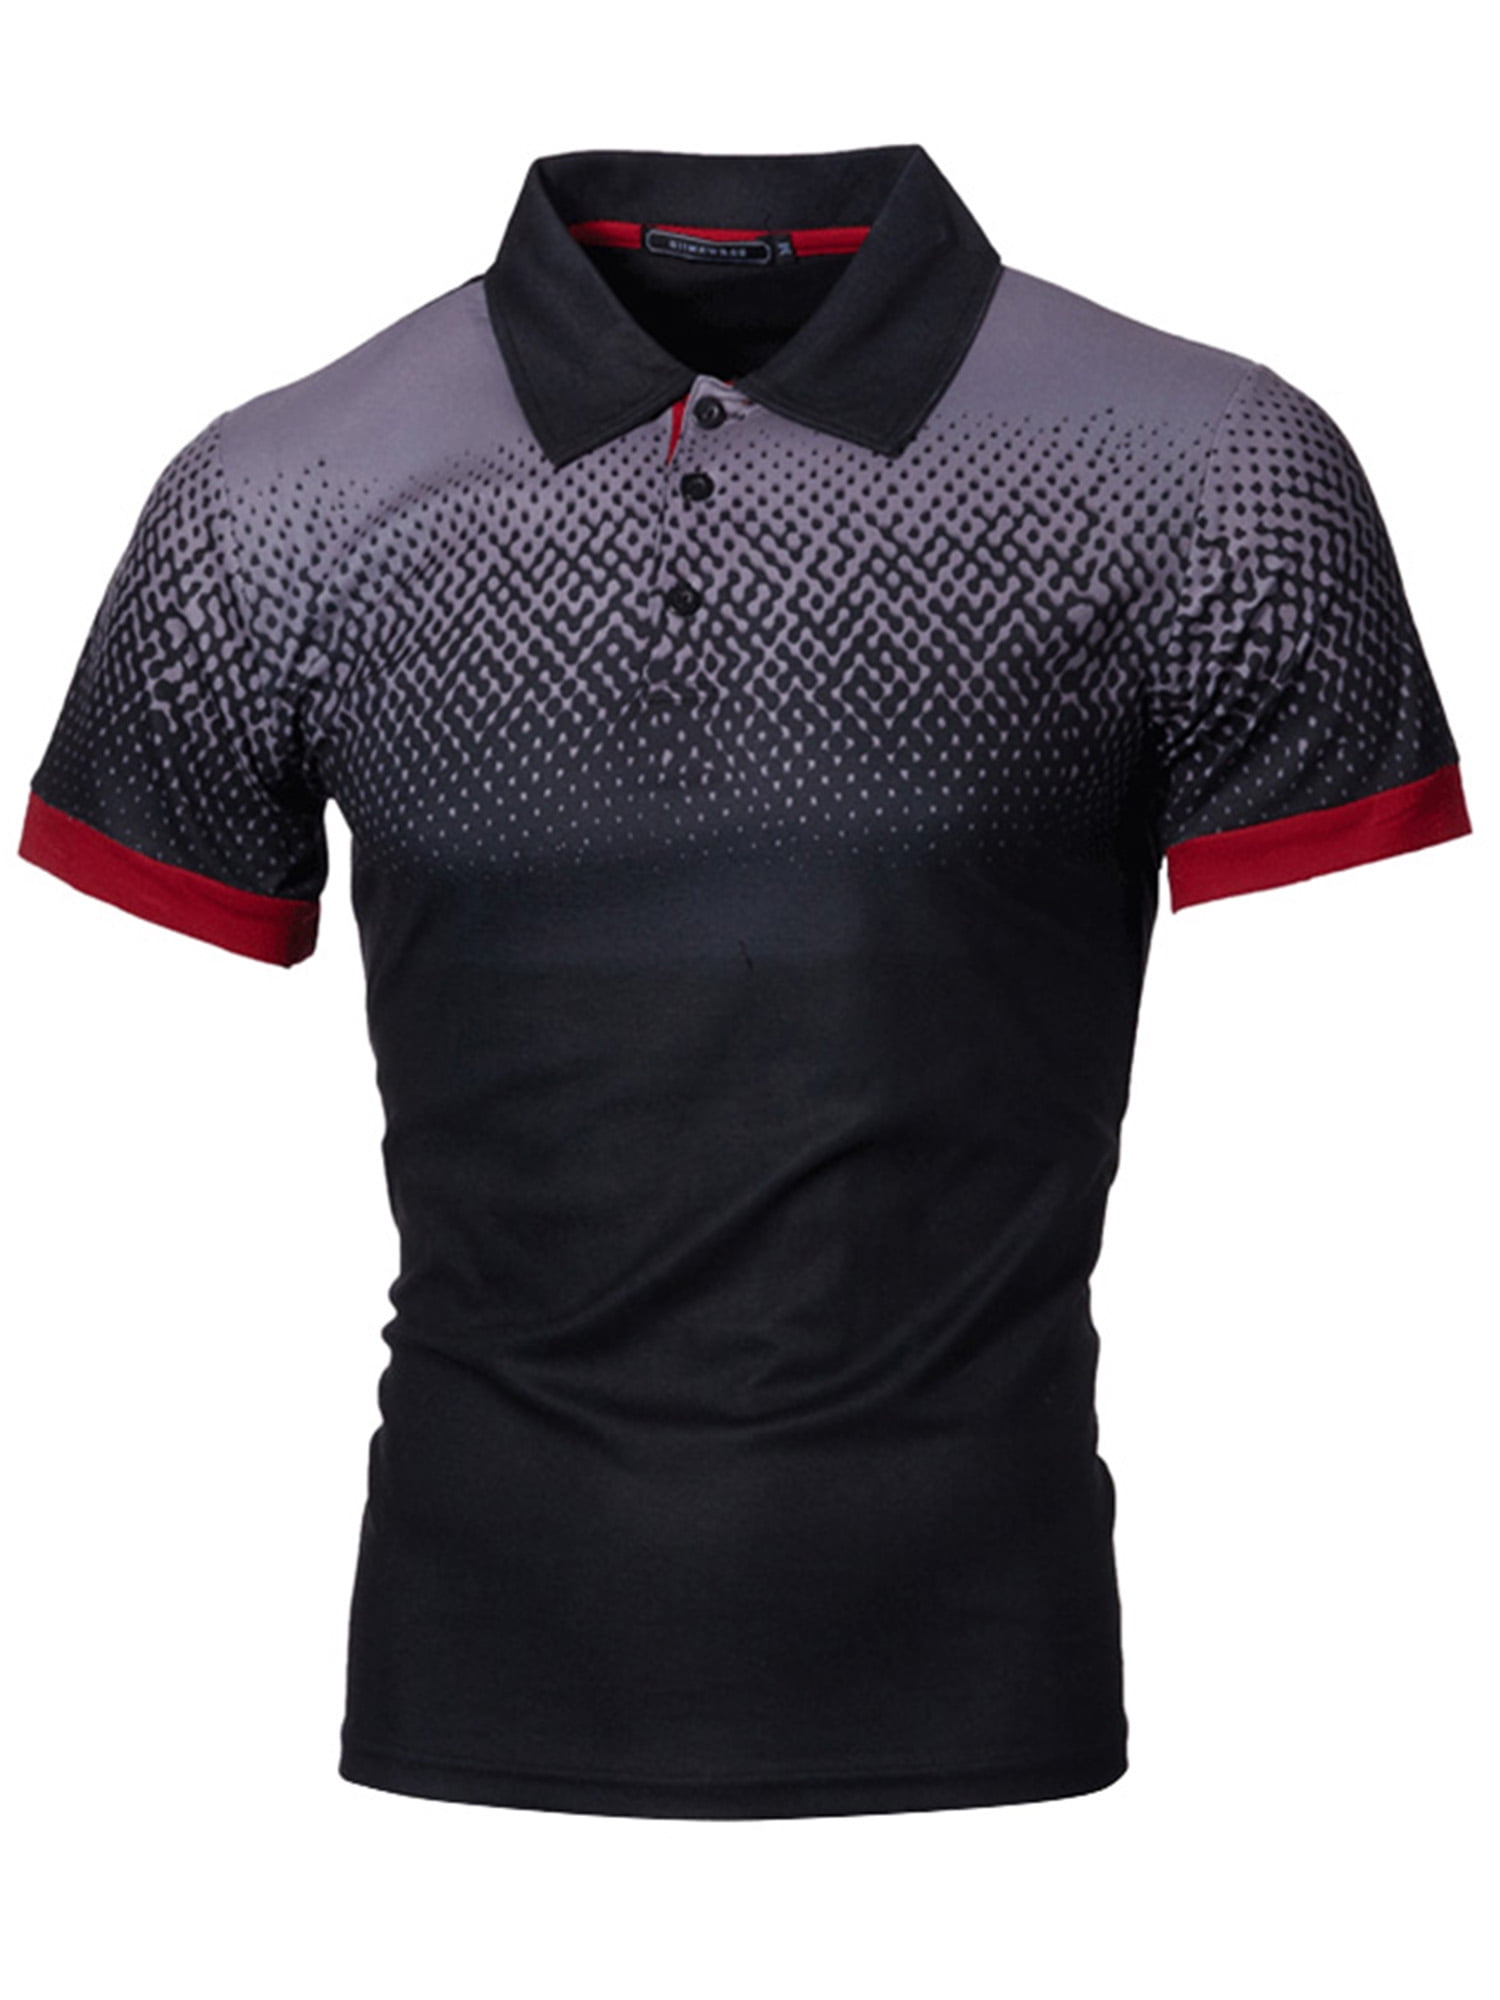 Avamo Men Workout Jersey T Shirts Tops Short Sleeve Running Athletic Golf  Shirt Casual Summer Pullover Sweat Polo Tee Shirt